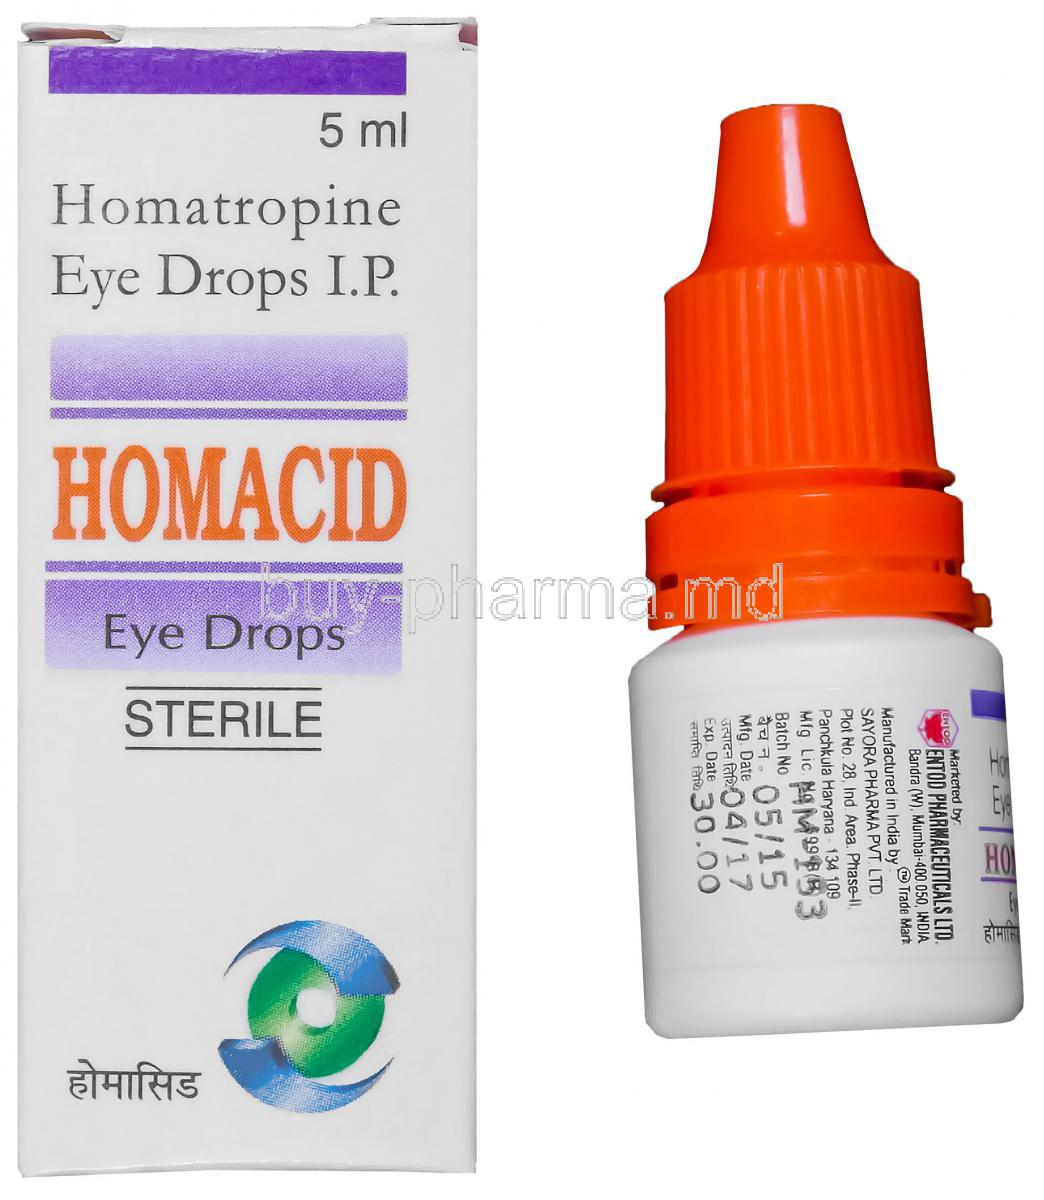 Homacid, Homatropine Eye Drops 5ml